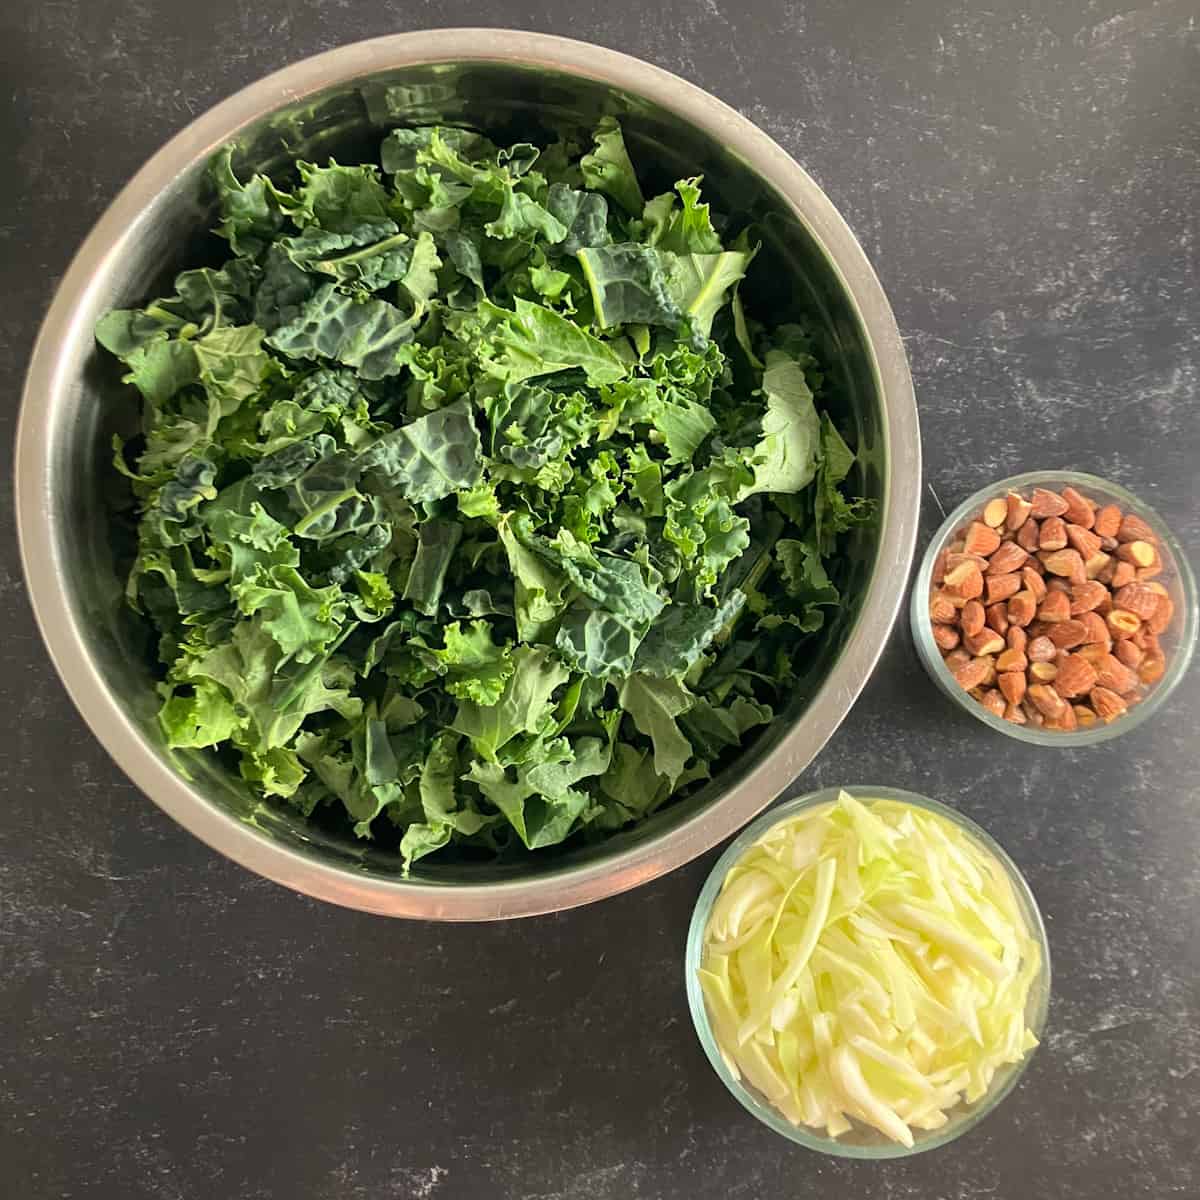 chick fil a kale crunch salad ingredients